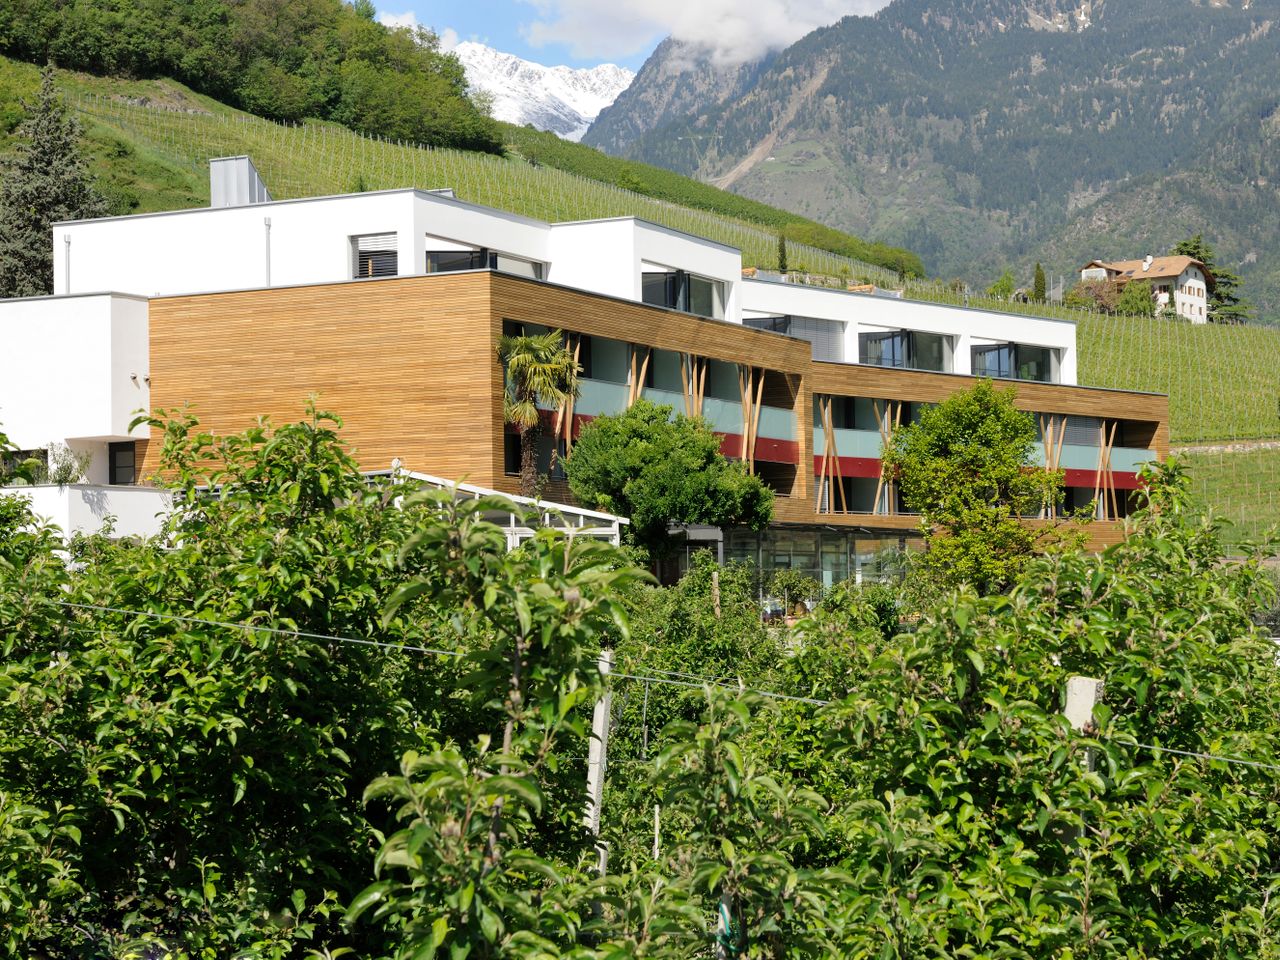 8 Tage alles grün in Südtirol - Golferlebnis Special